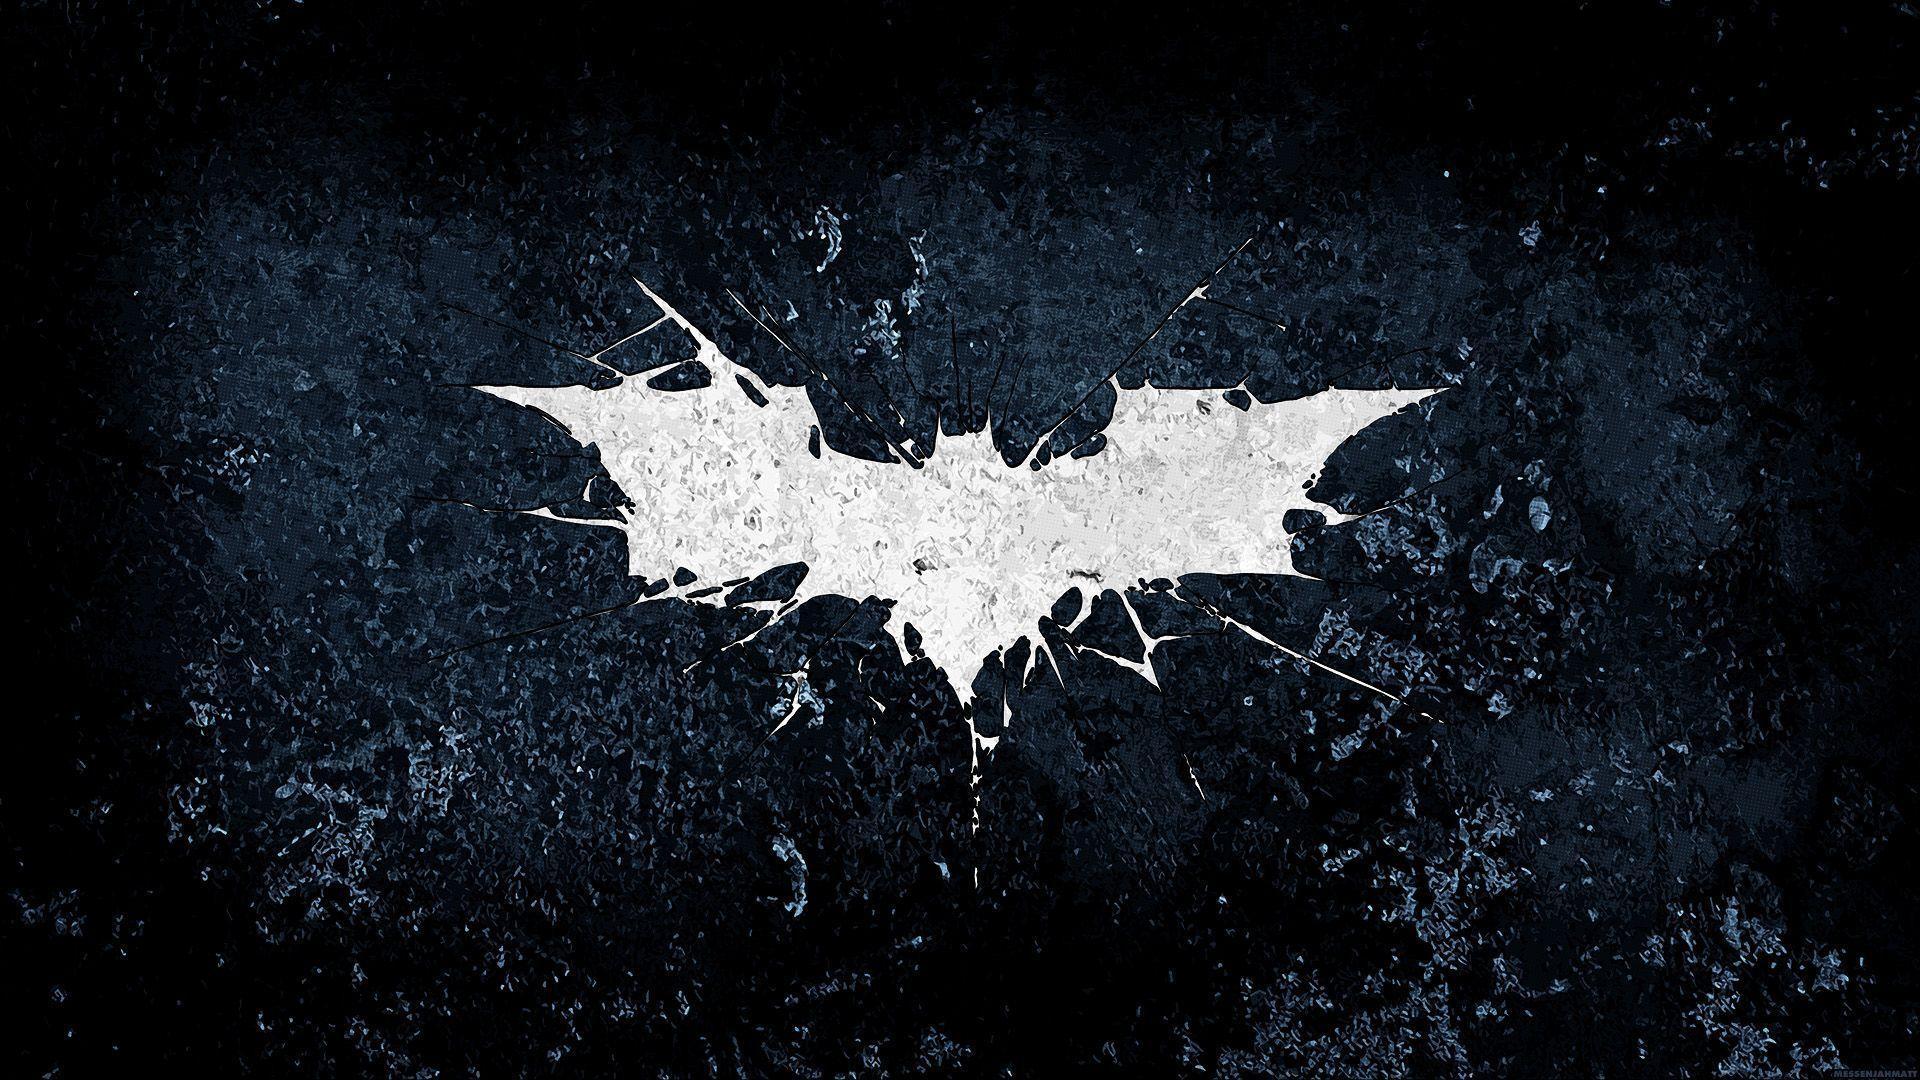 Dark Knight Rises HD Wallpaper and Desktop Background. Dark